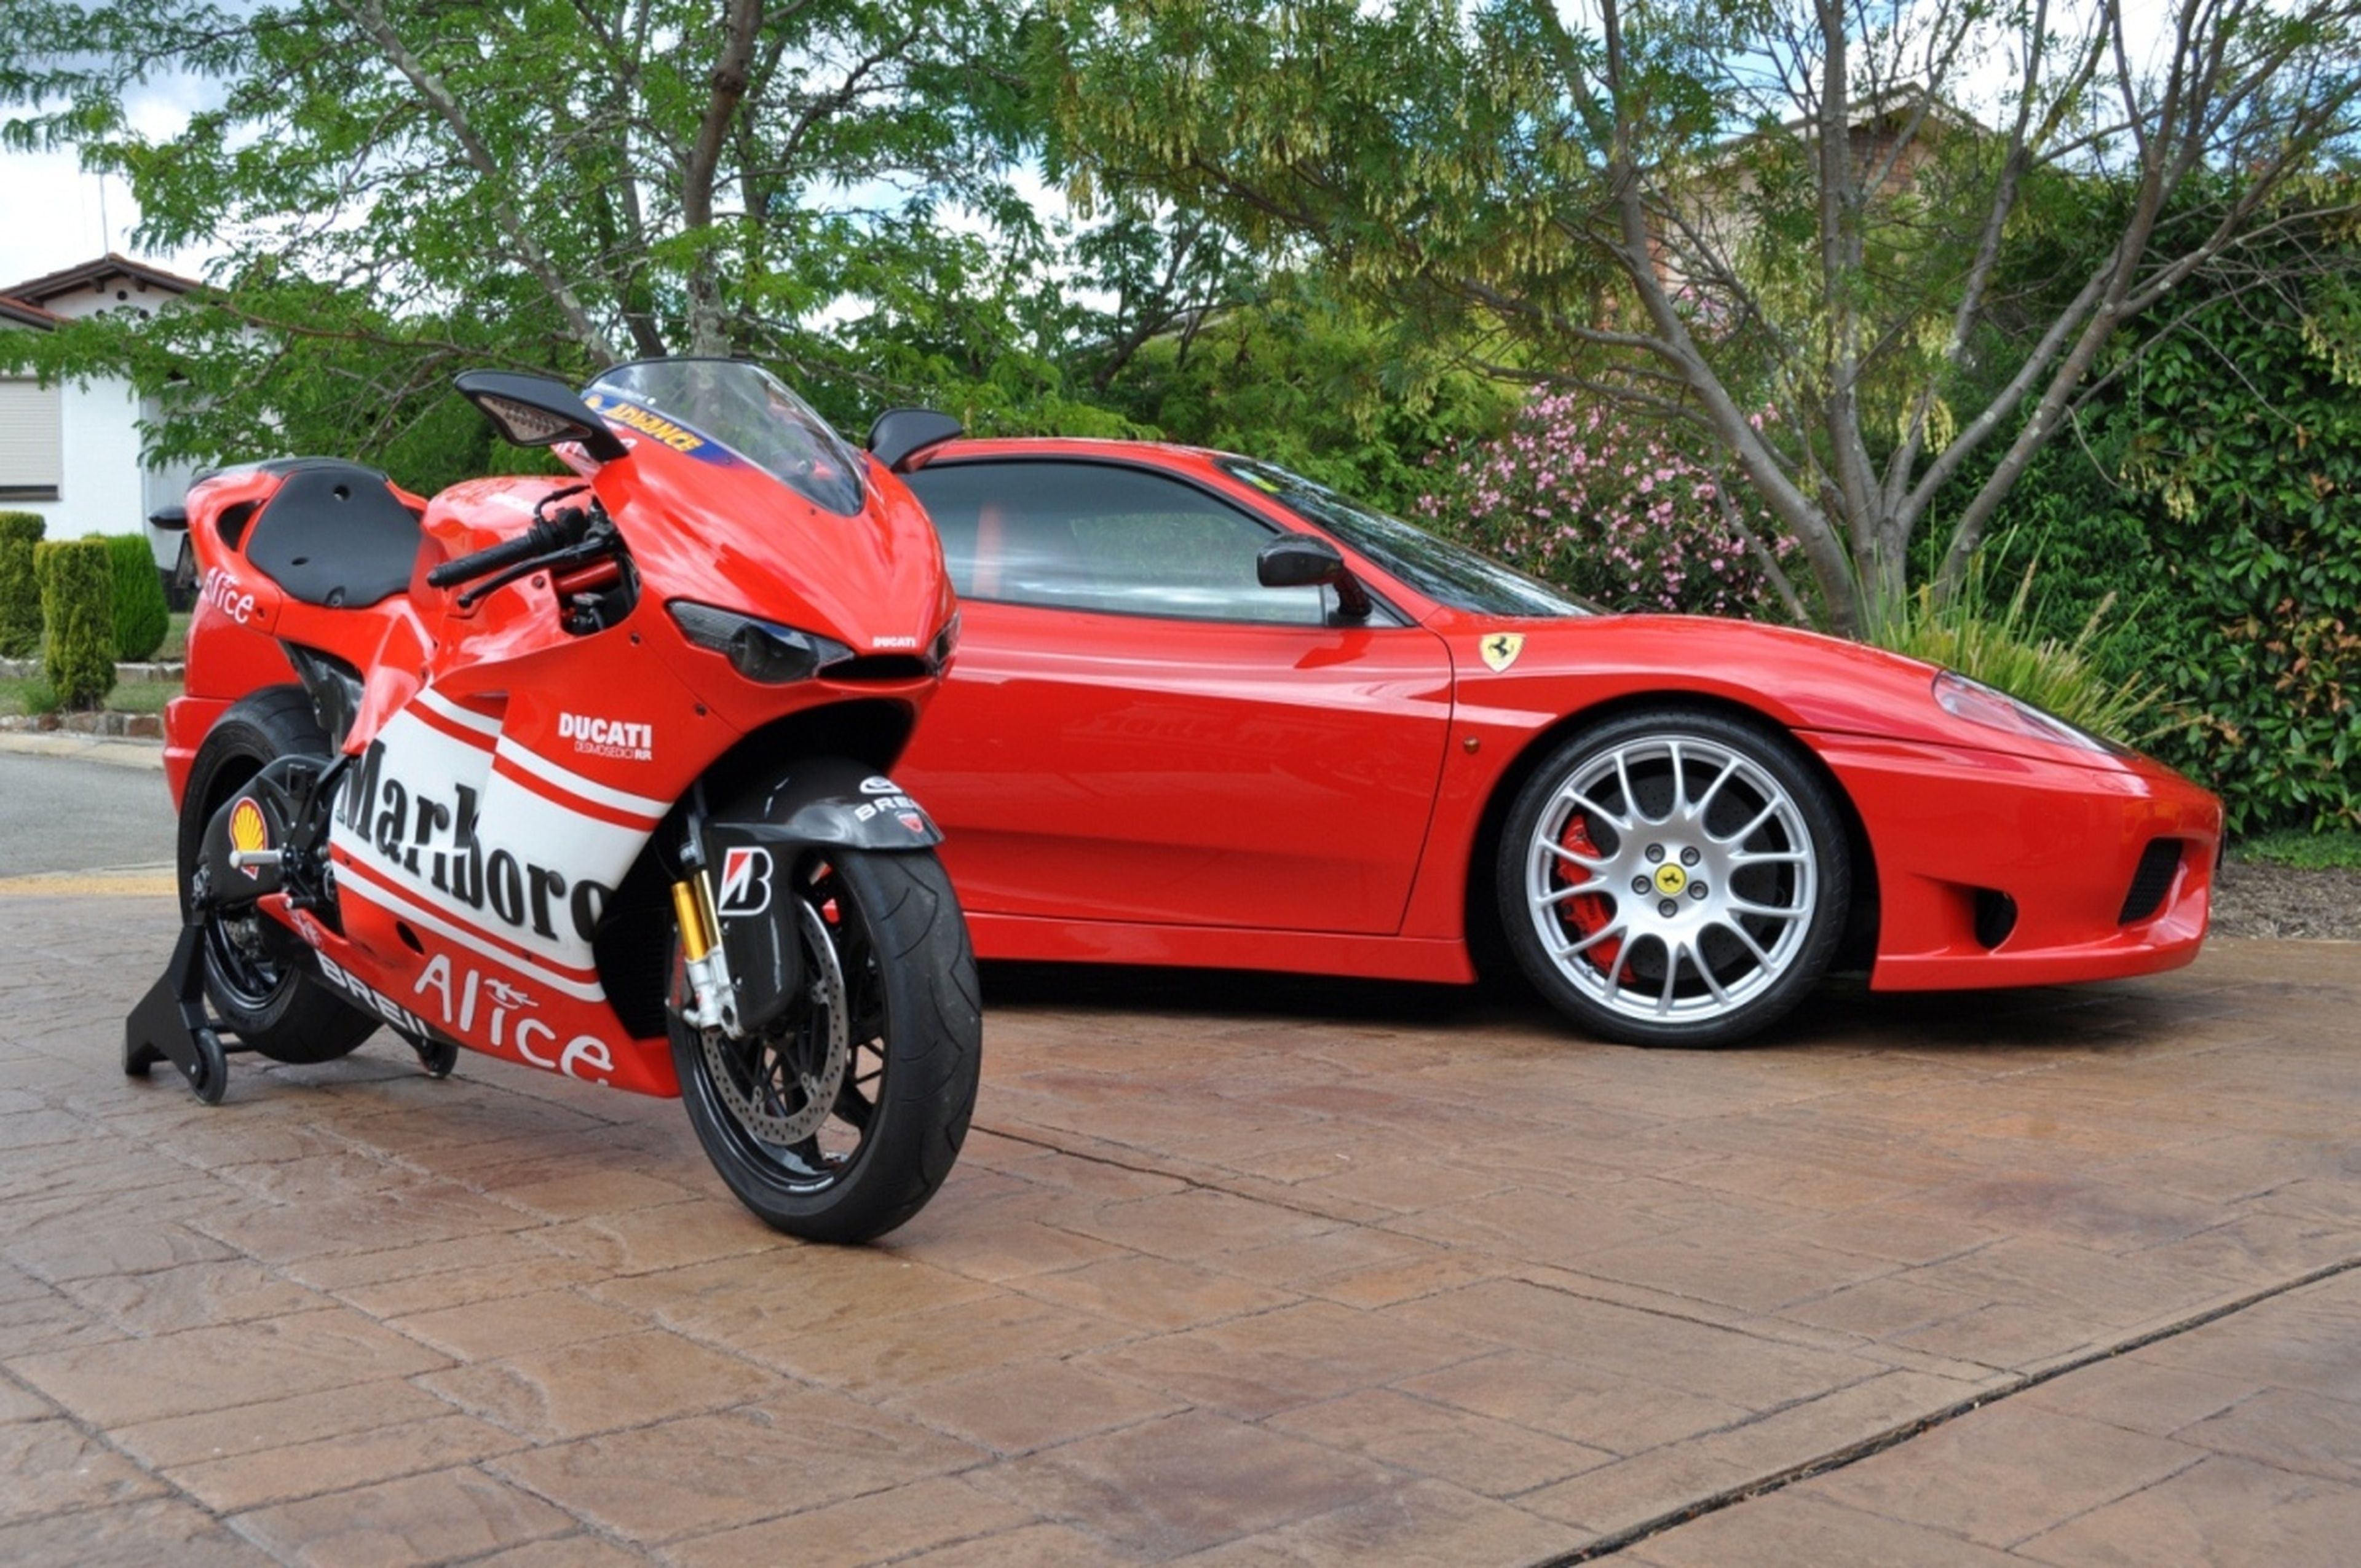 El sueño de Italia: Ferrari se plantea comprar Ducati